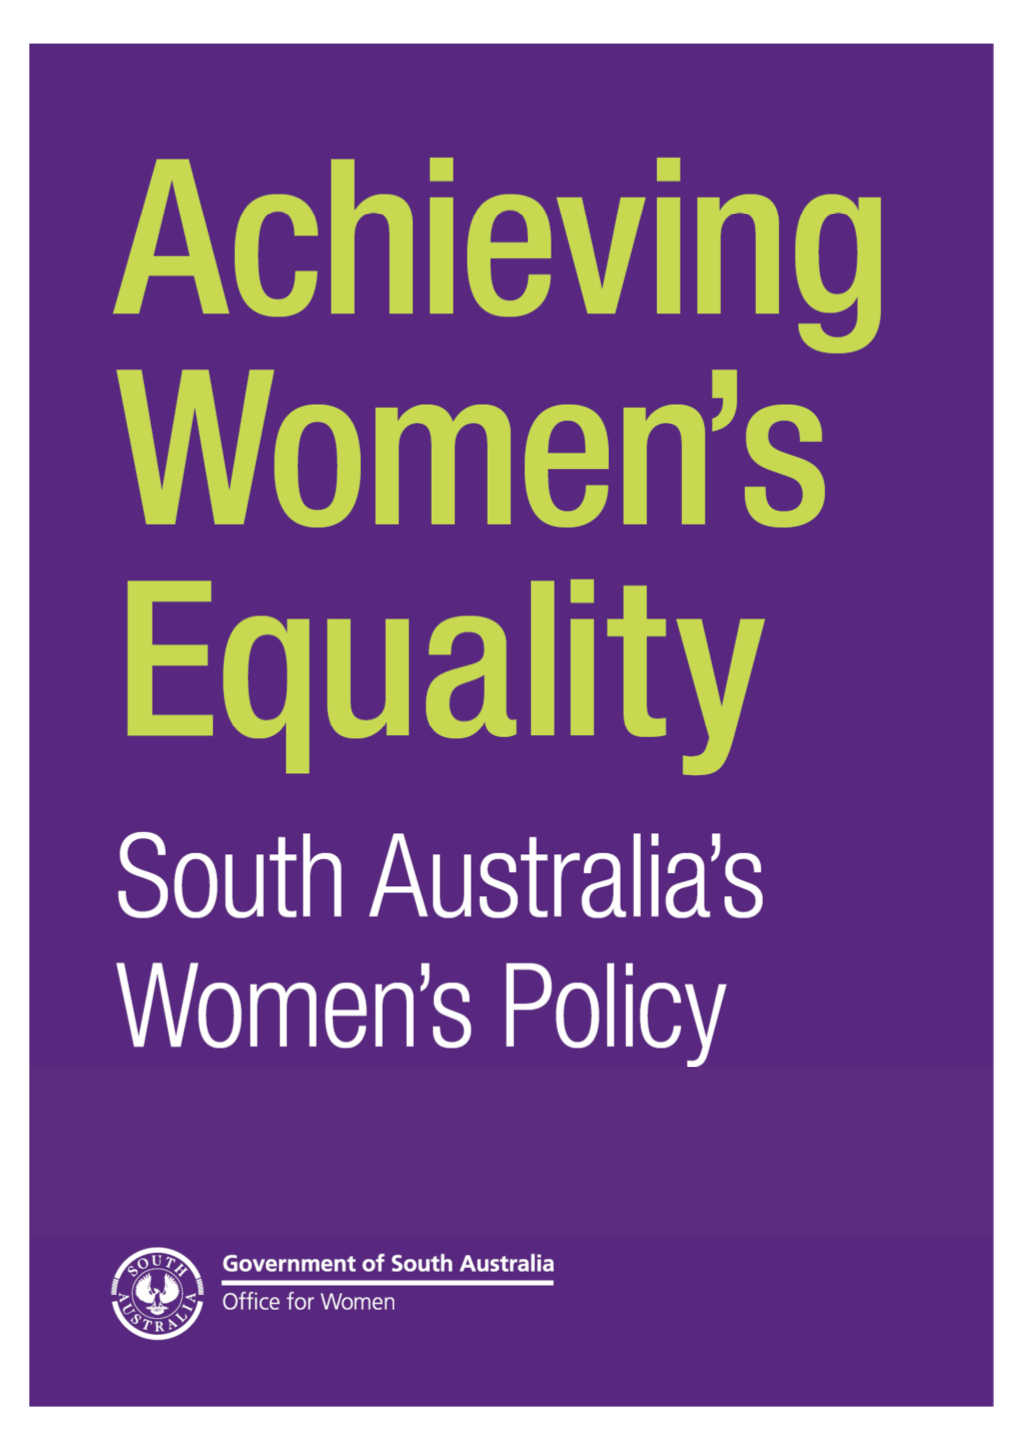 South Australia's Women's Policy